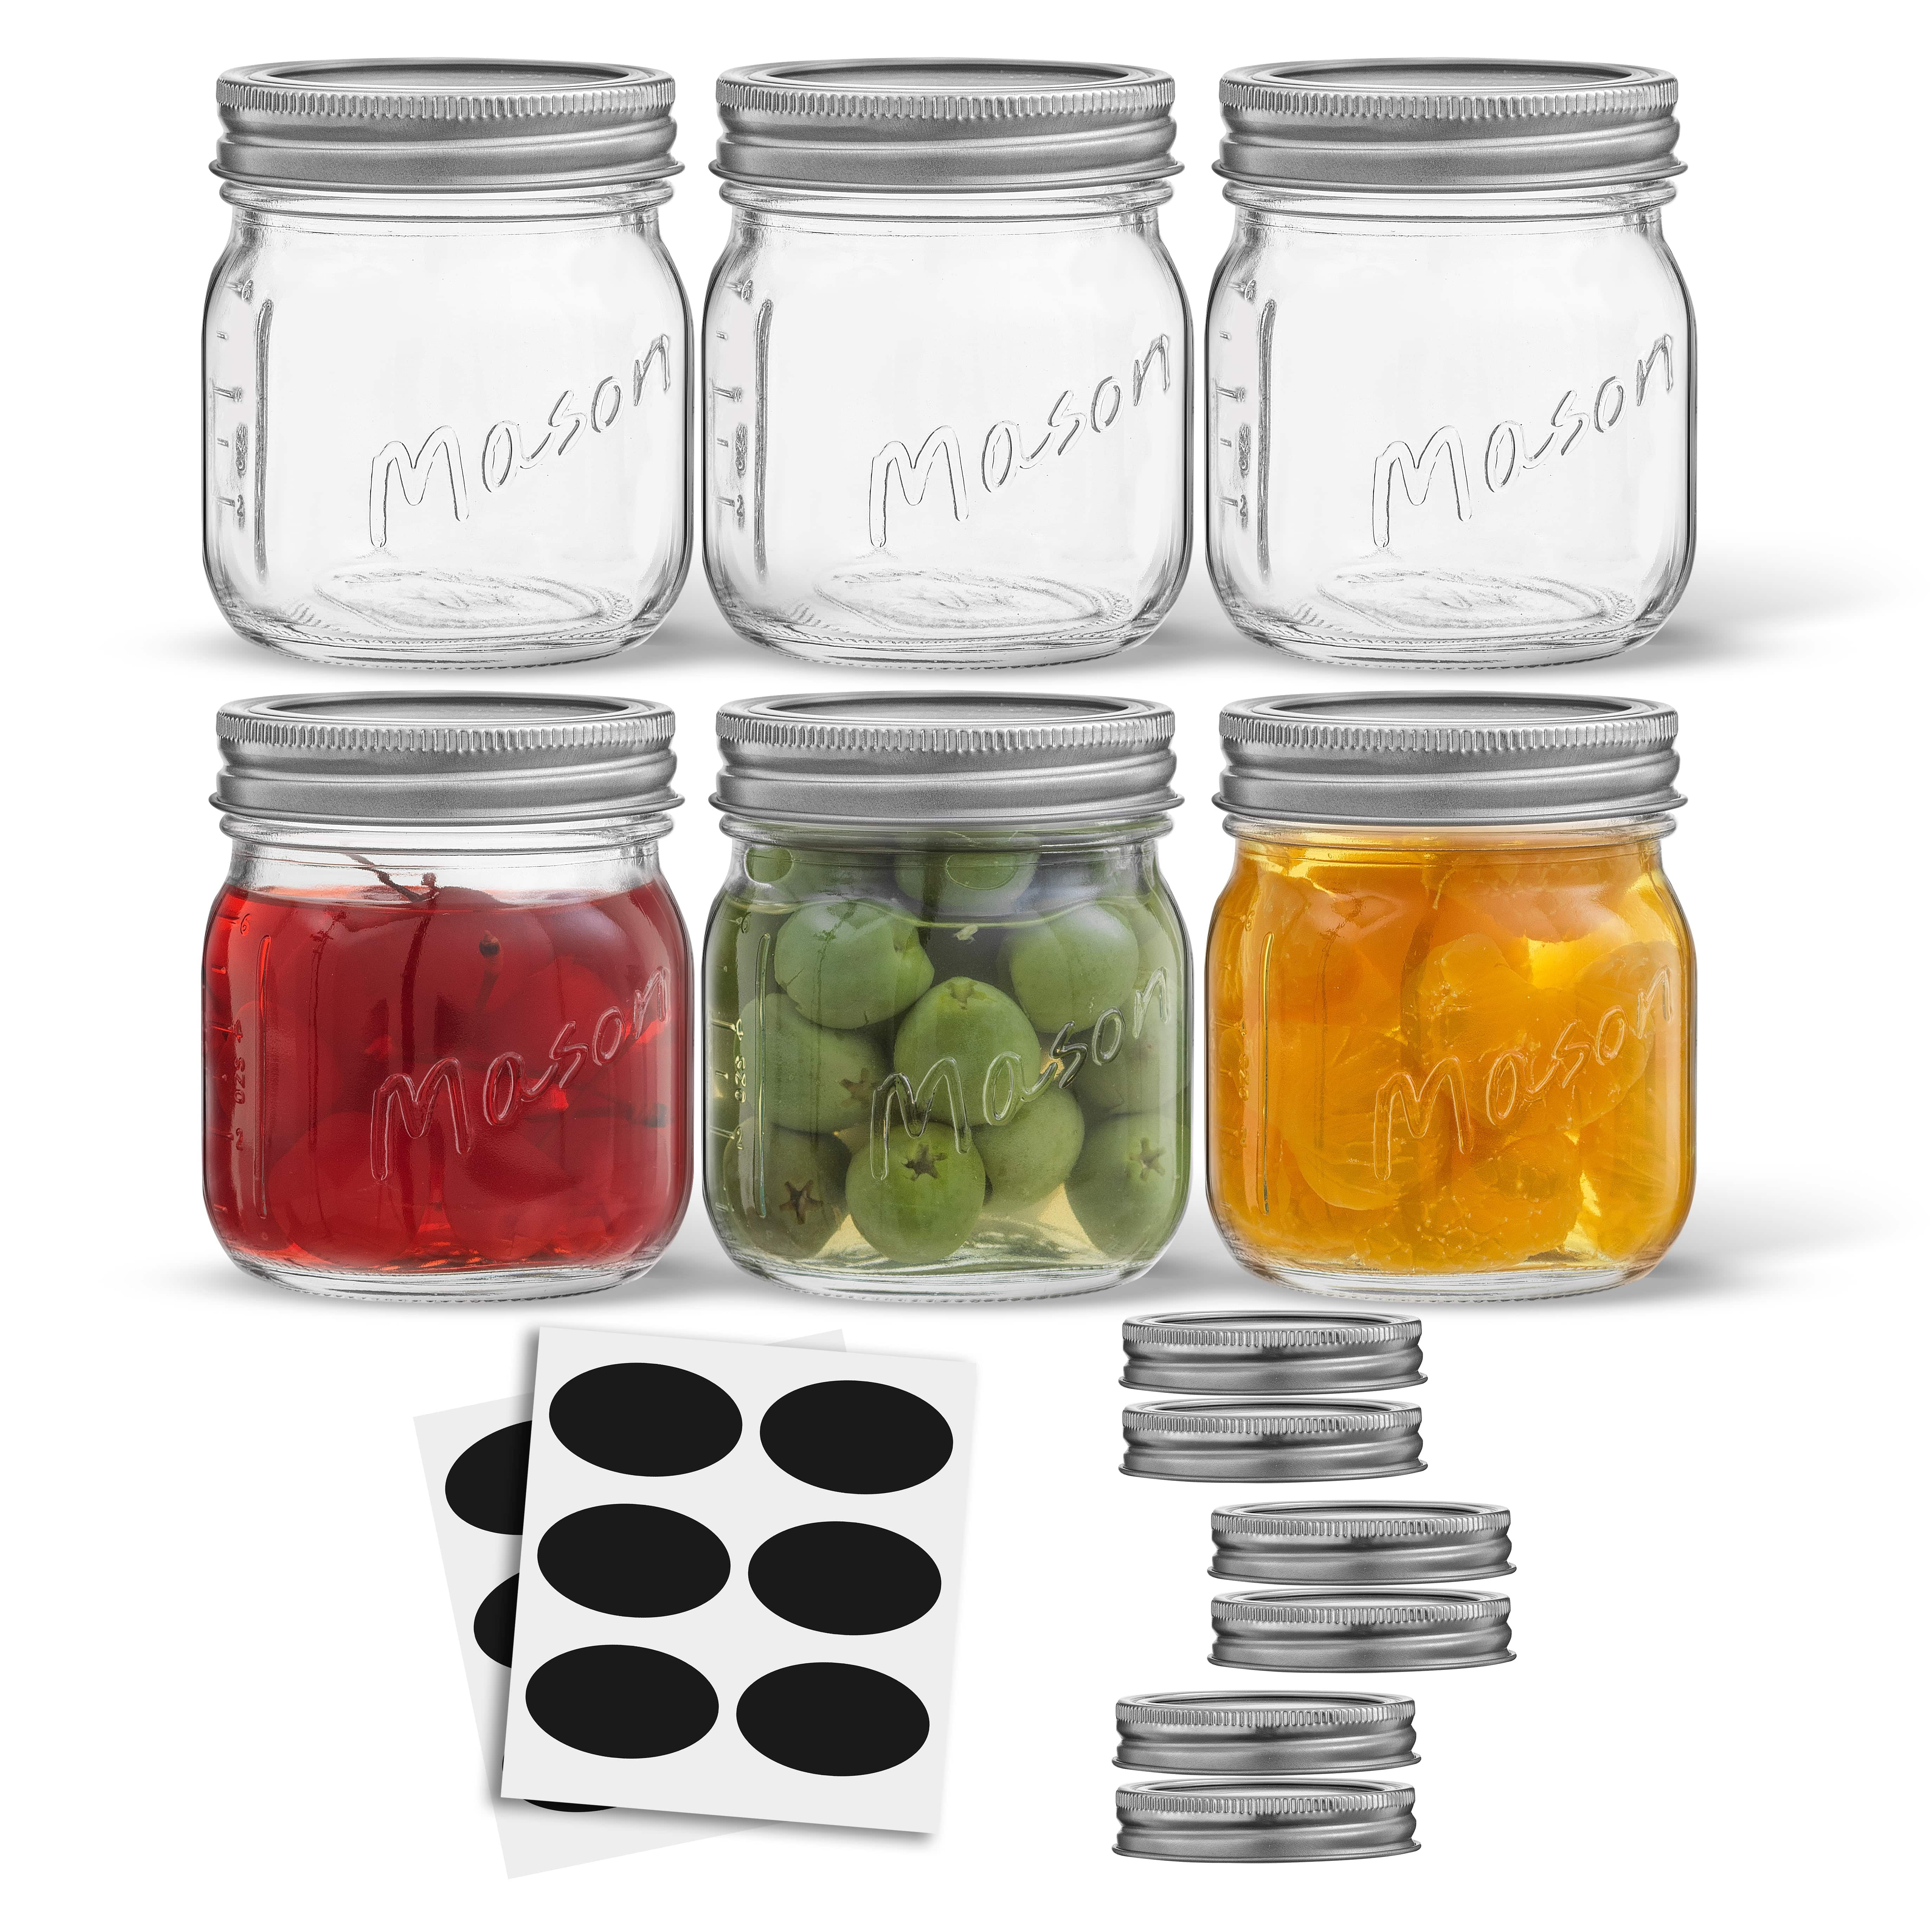 Amzcku Colored Mason Jars 8 oz with Metal Lids - Regular Mouth Canning